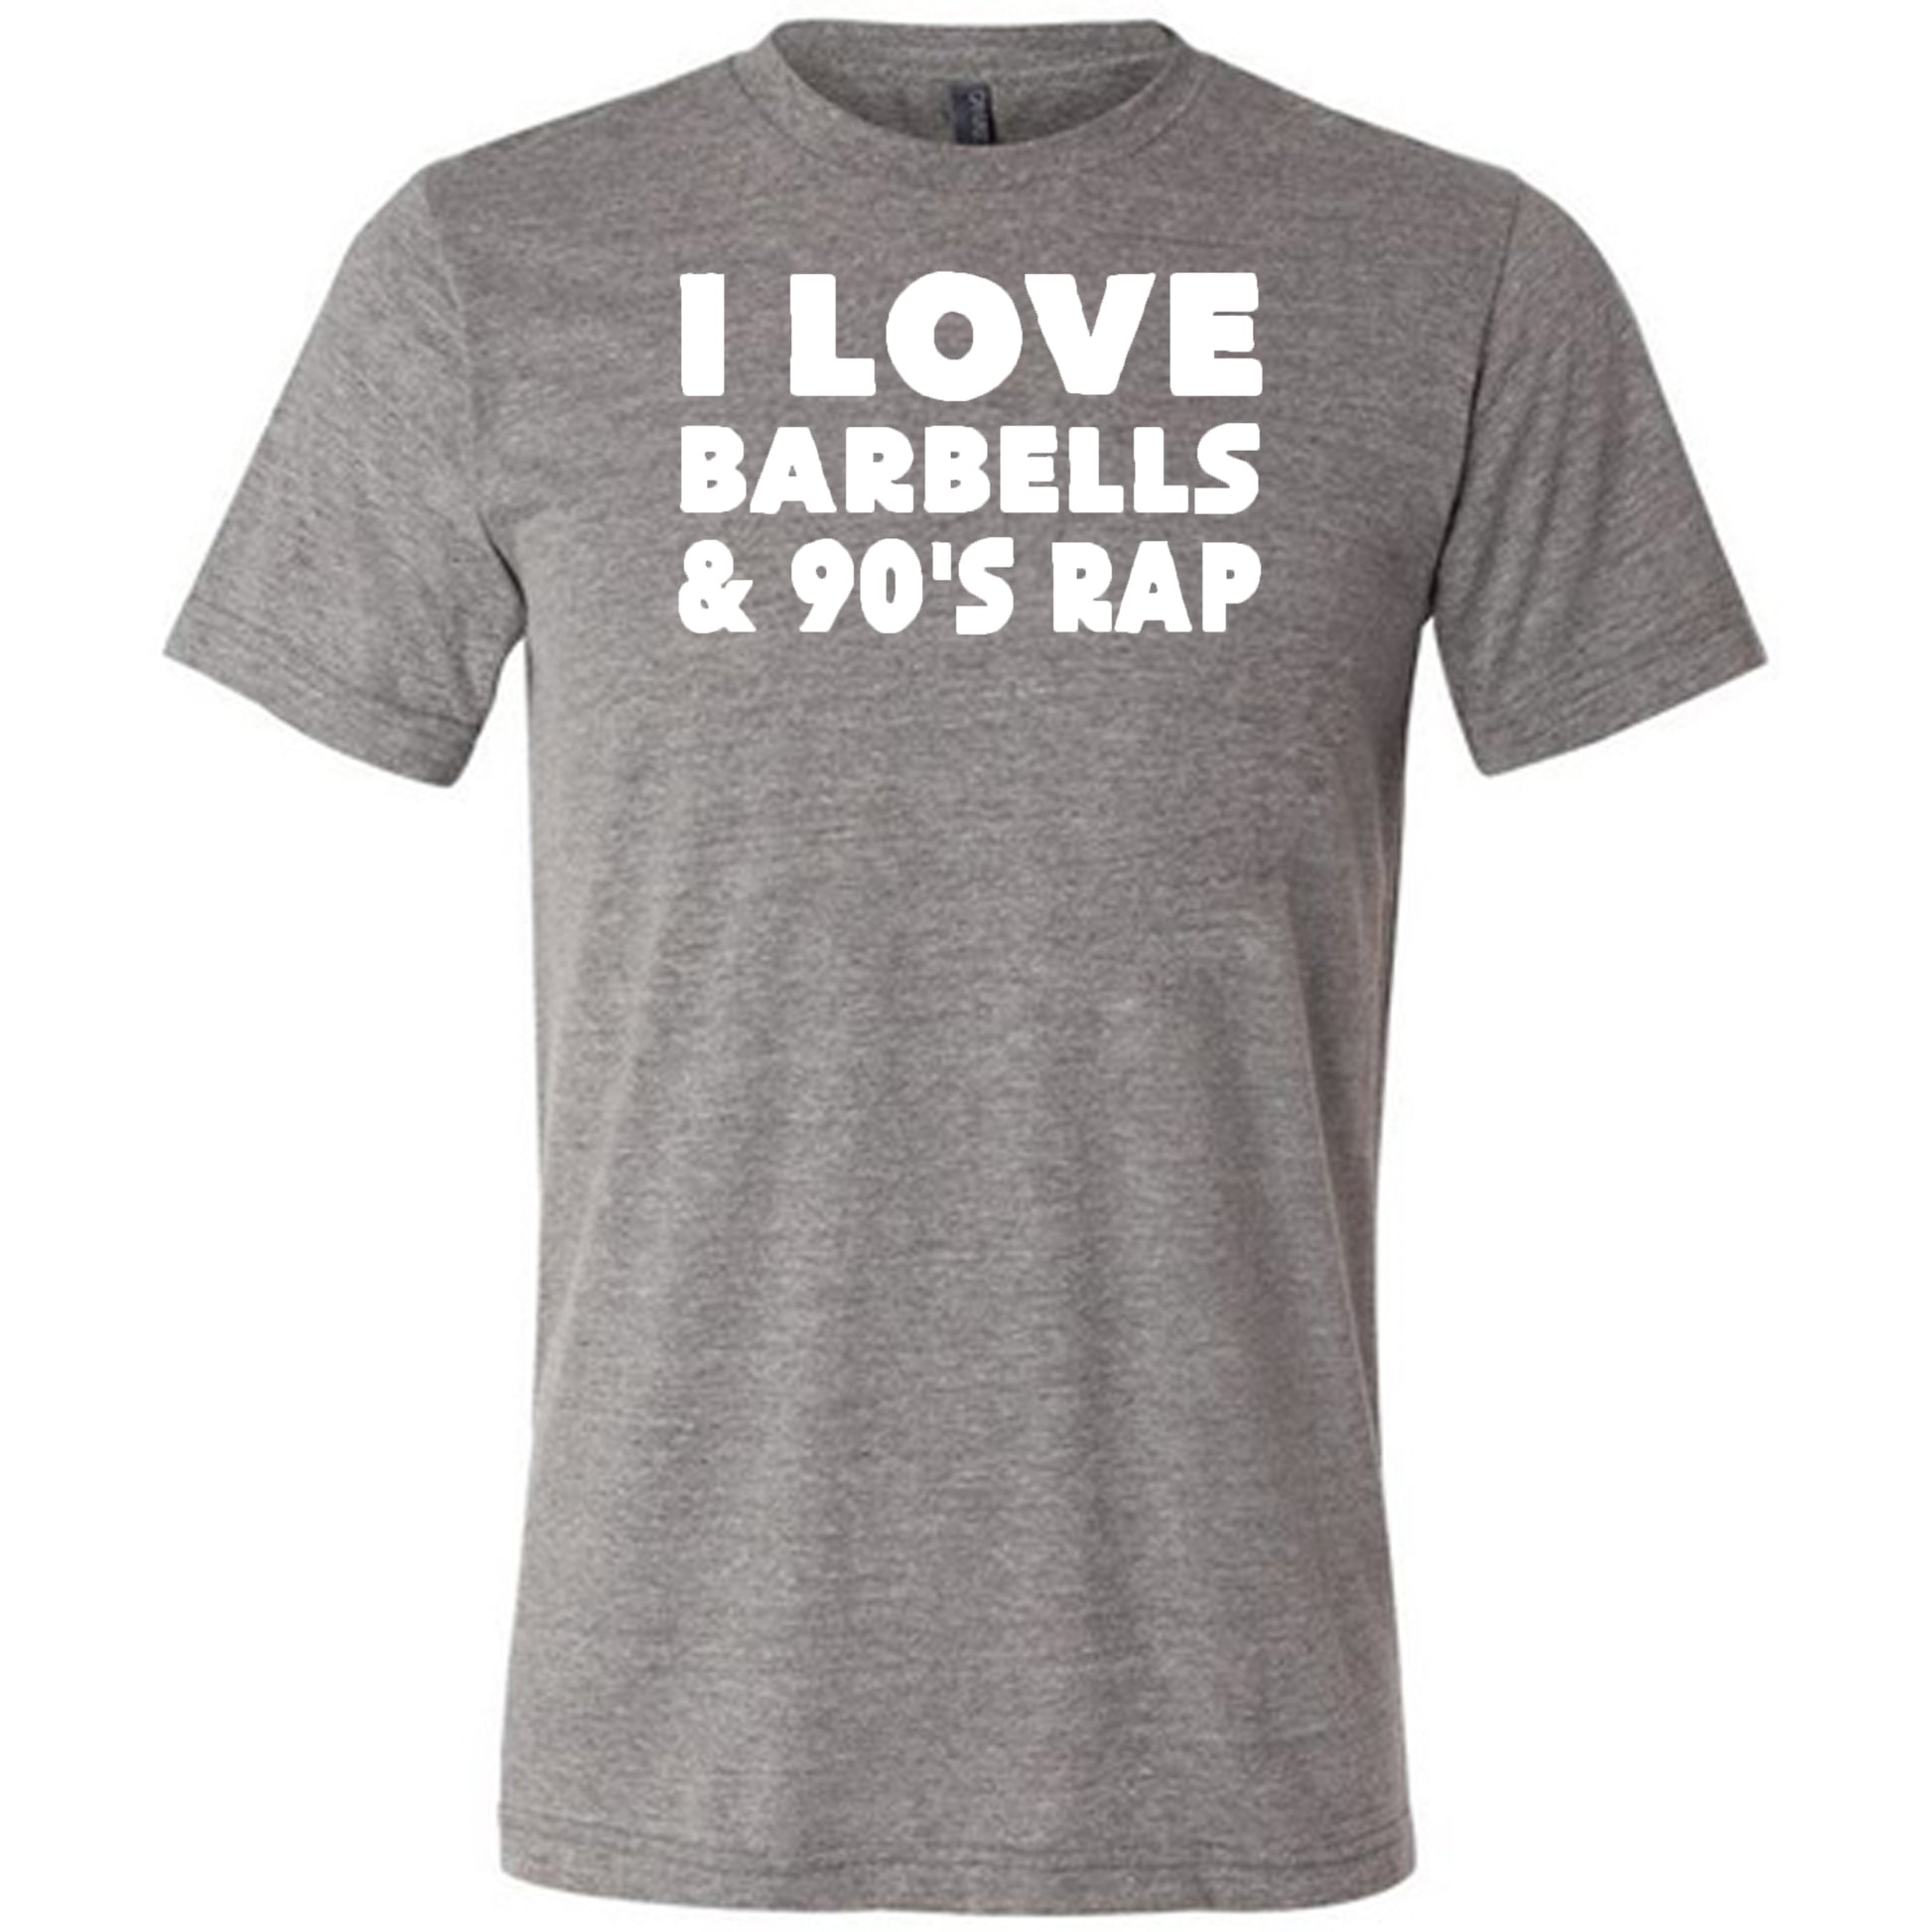 I love barbells & 90's rap grey unisex tee